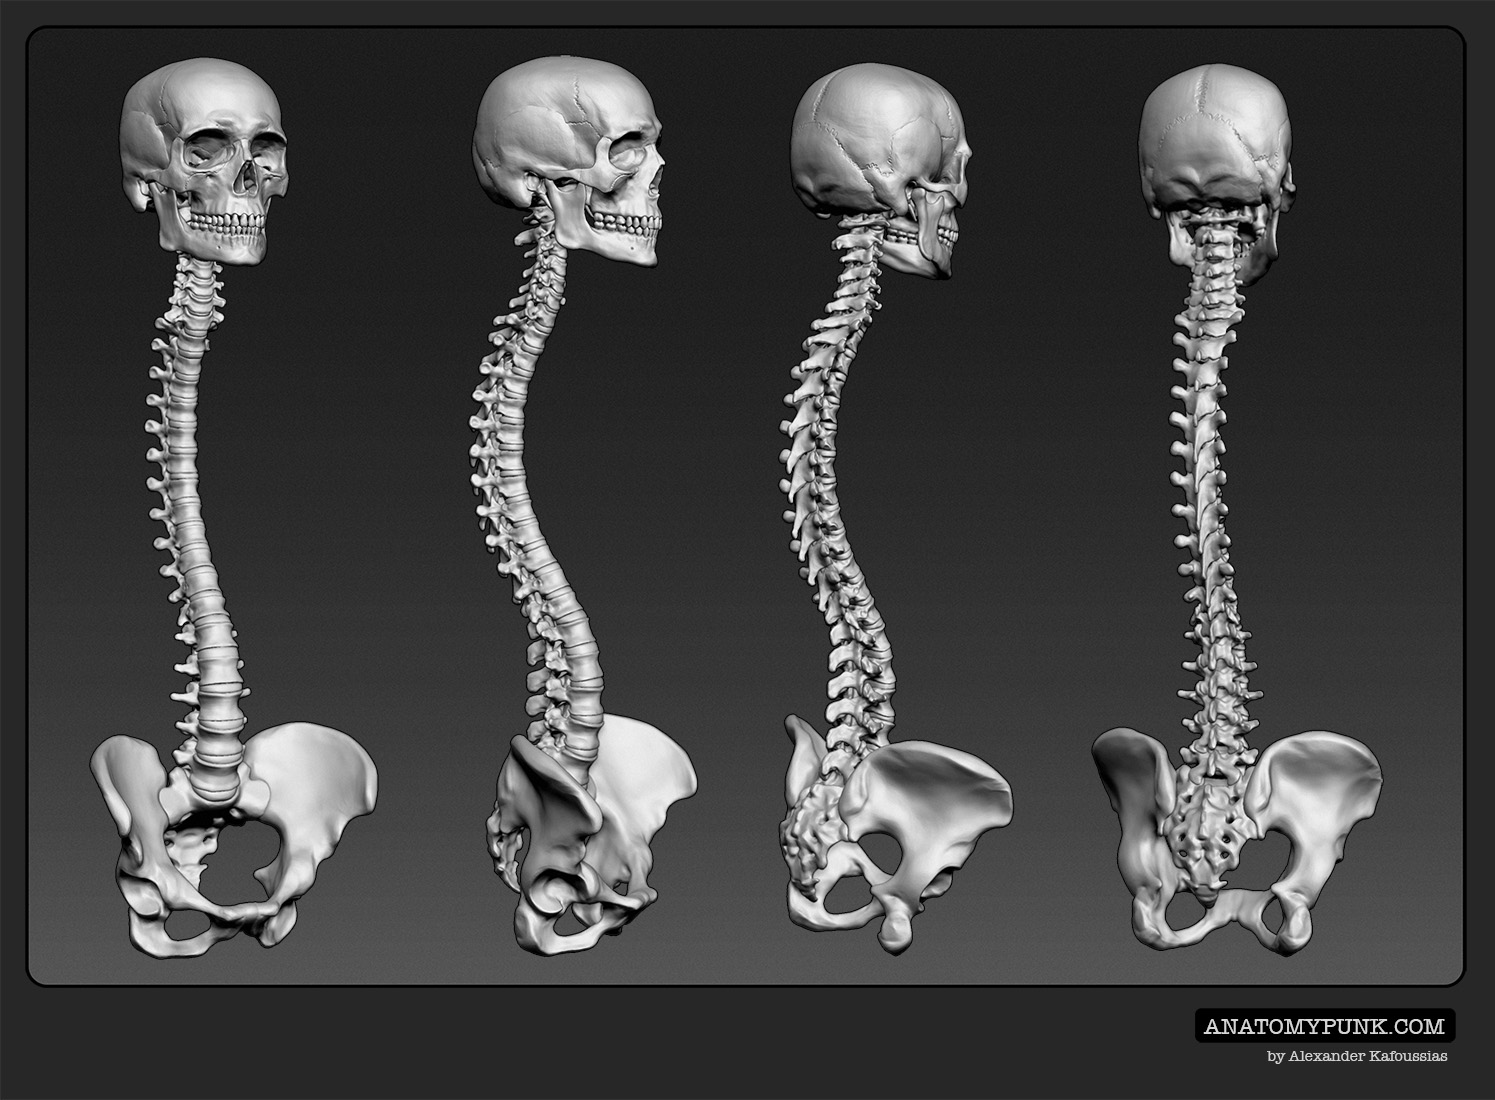 Skeleton5_anatomypunk.jpeg